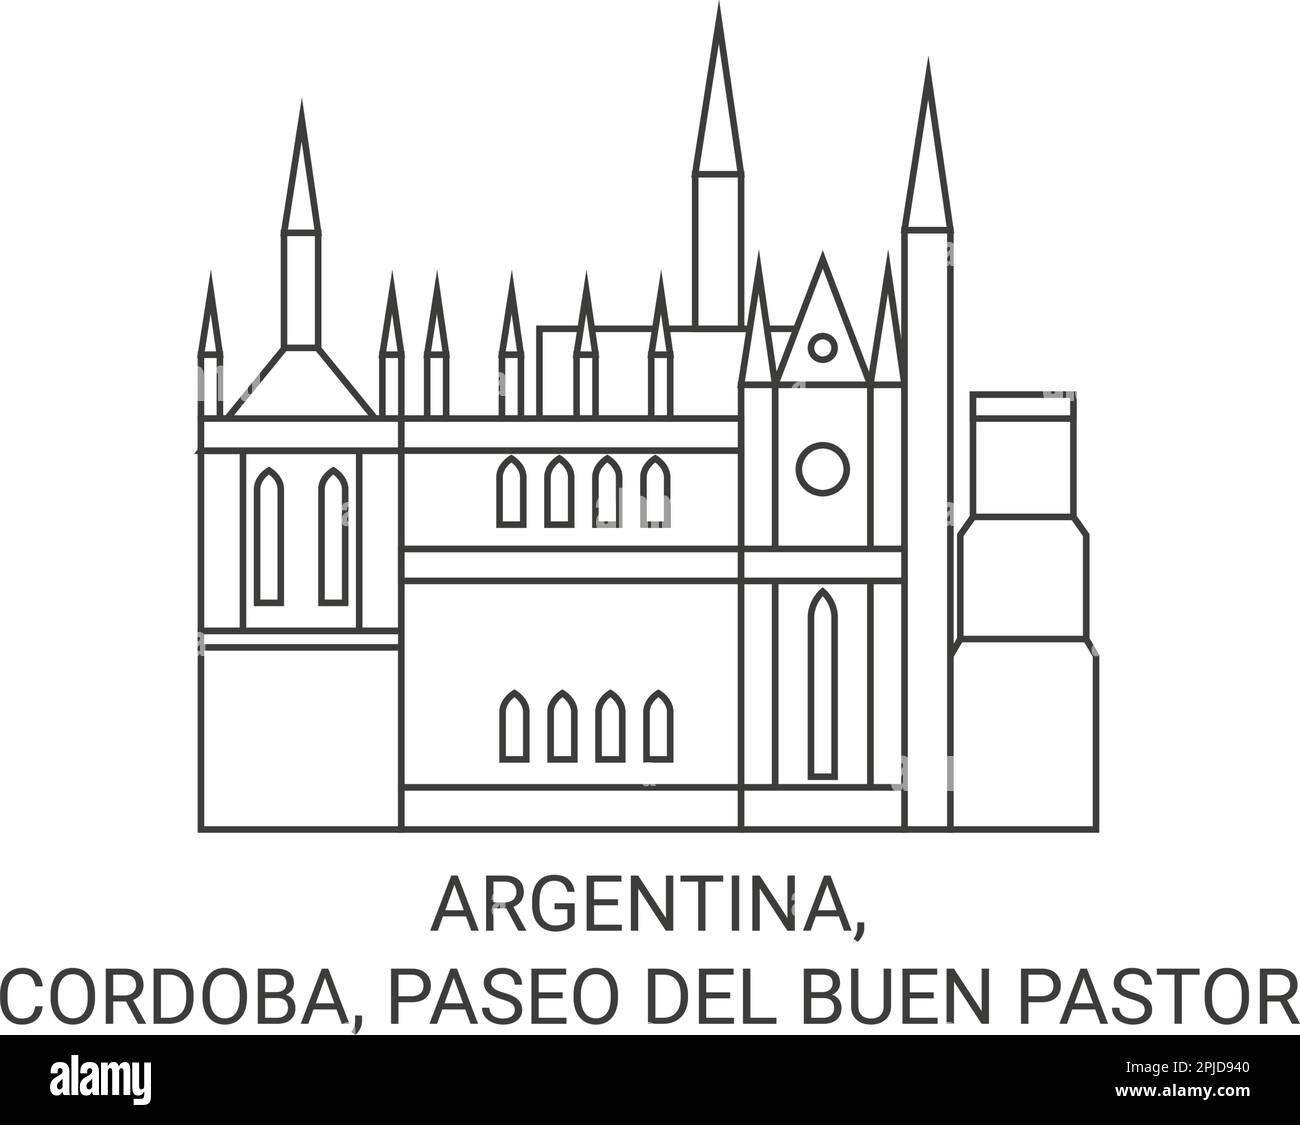 Argentina, Cordoba, Paseo Del Buen Pastor travel landmark vector illustration Stock Vector